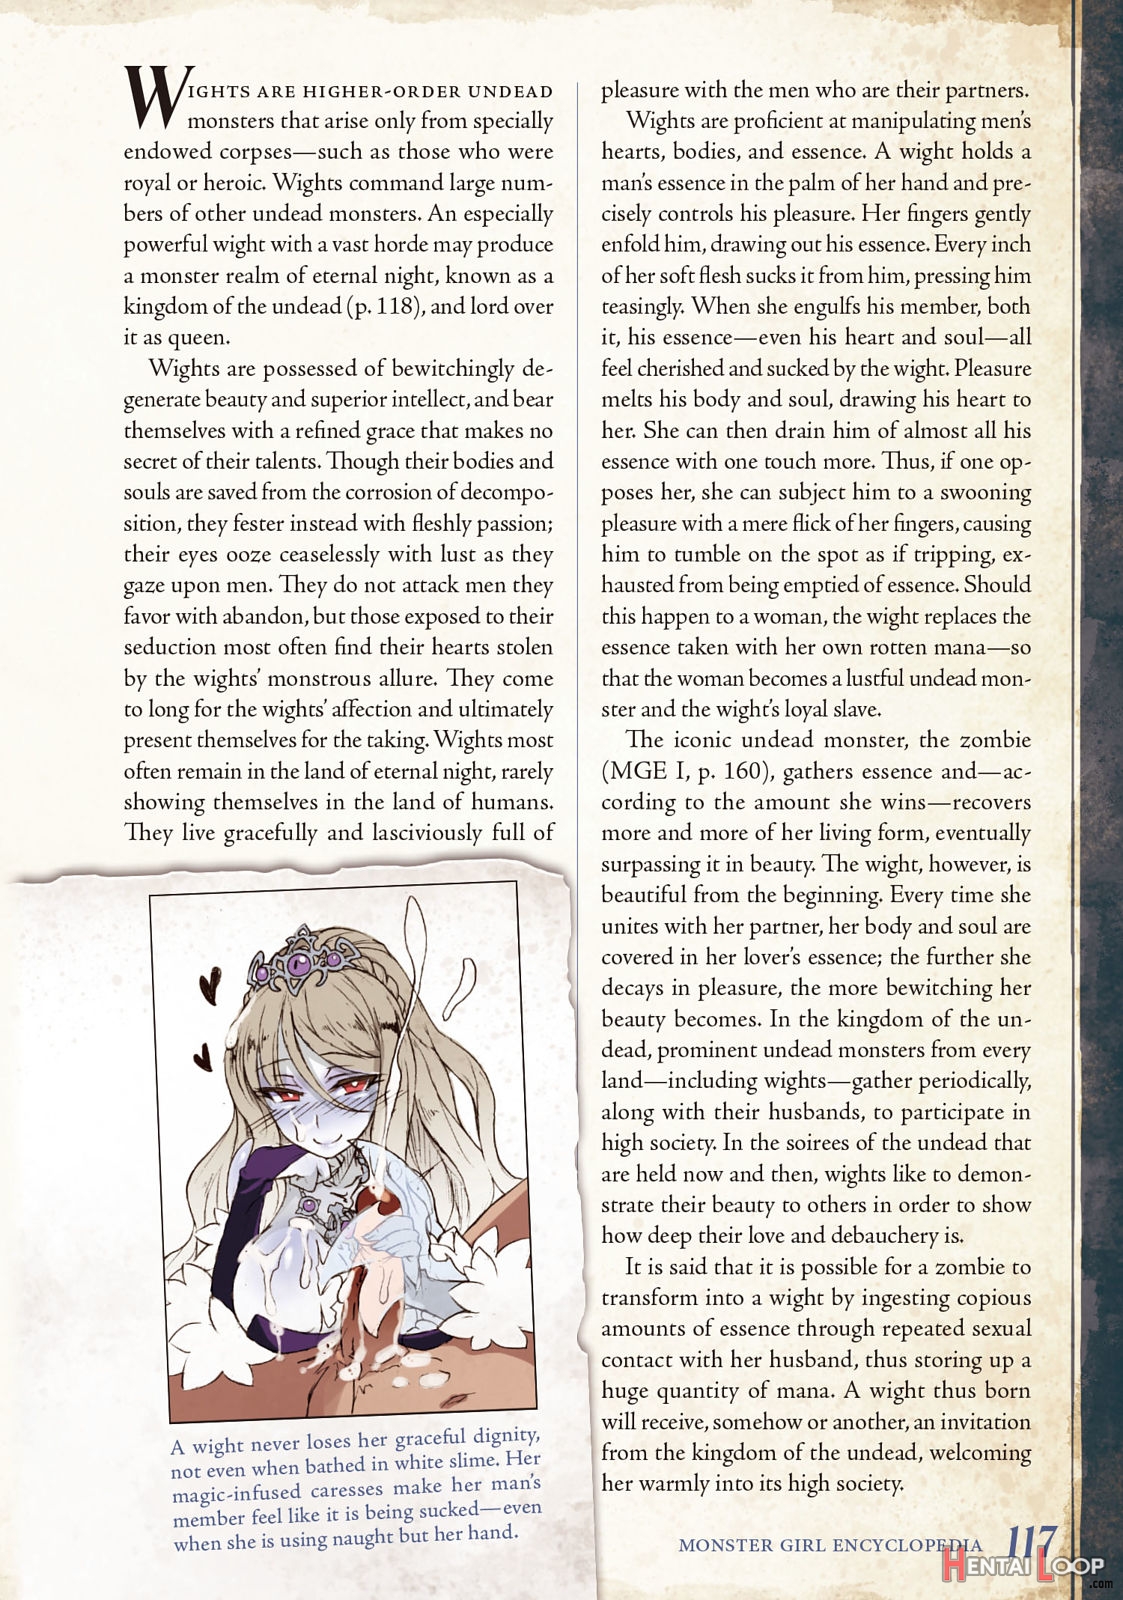 Monster Girl Encyclopedia Vol. 2 page 118